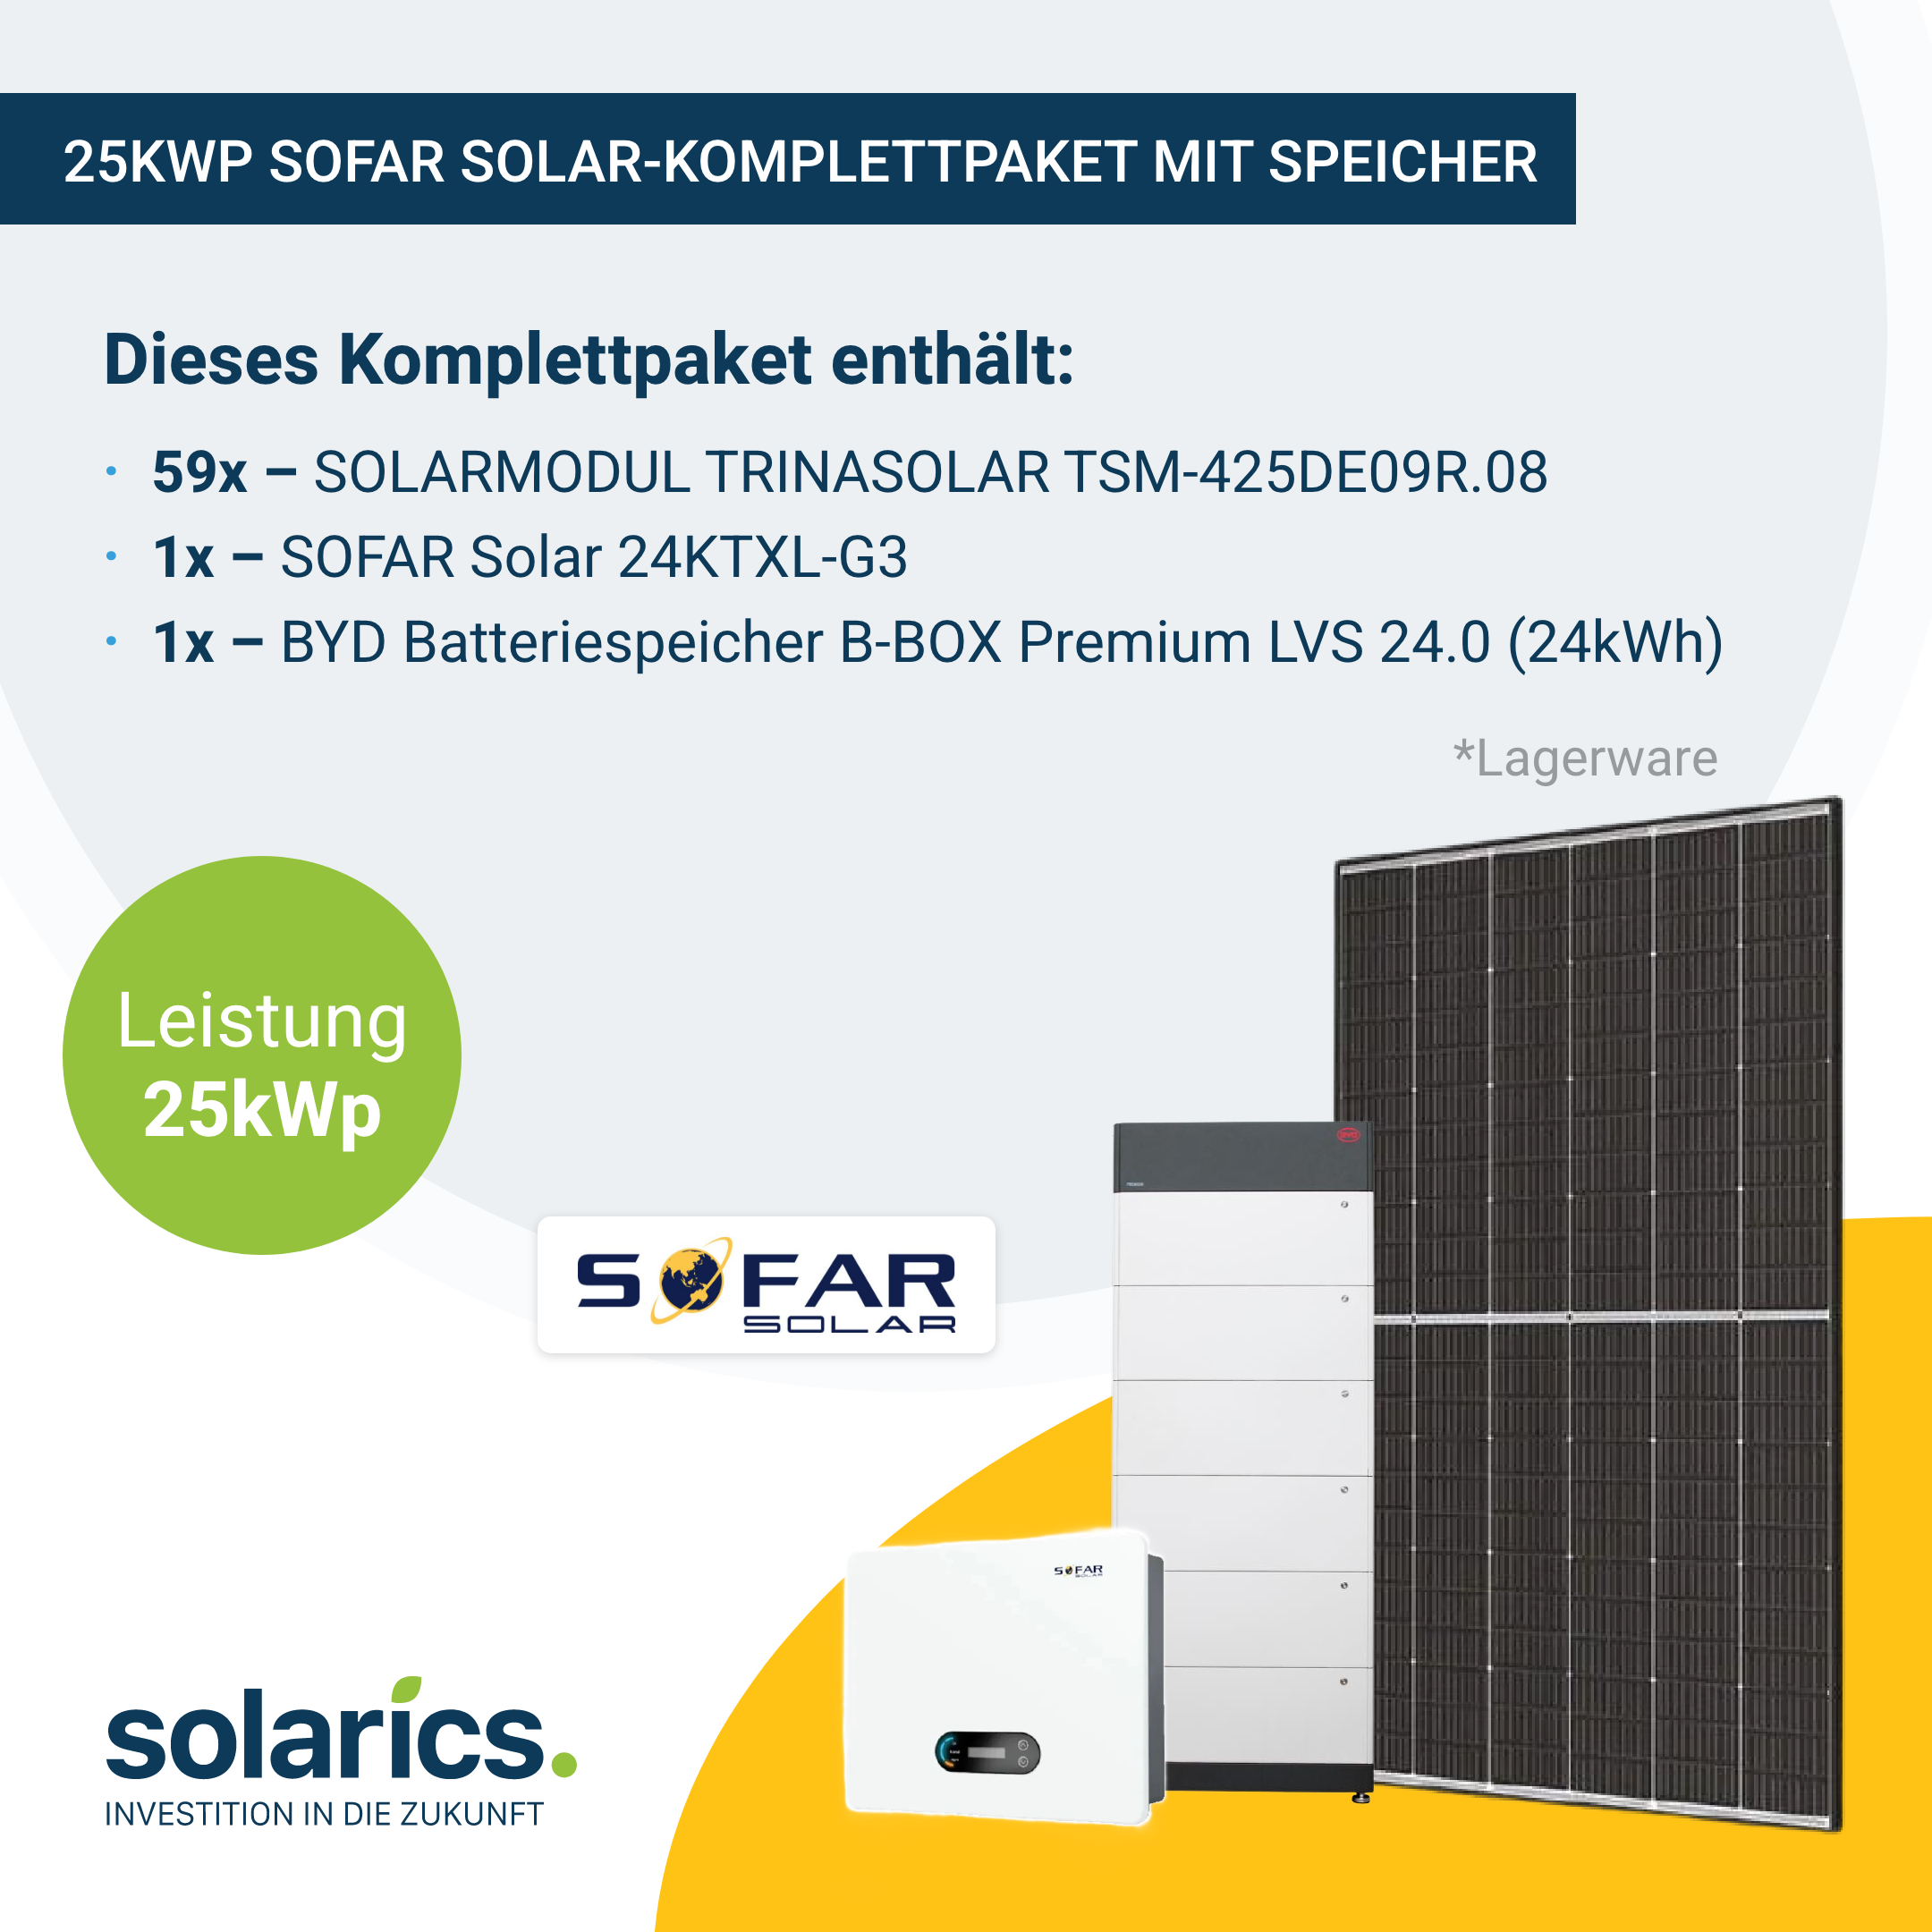 25kWp SOFAR Solar-Komplettpaket mit Speicher – Solarics GmbH